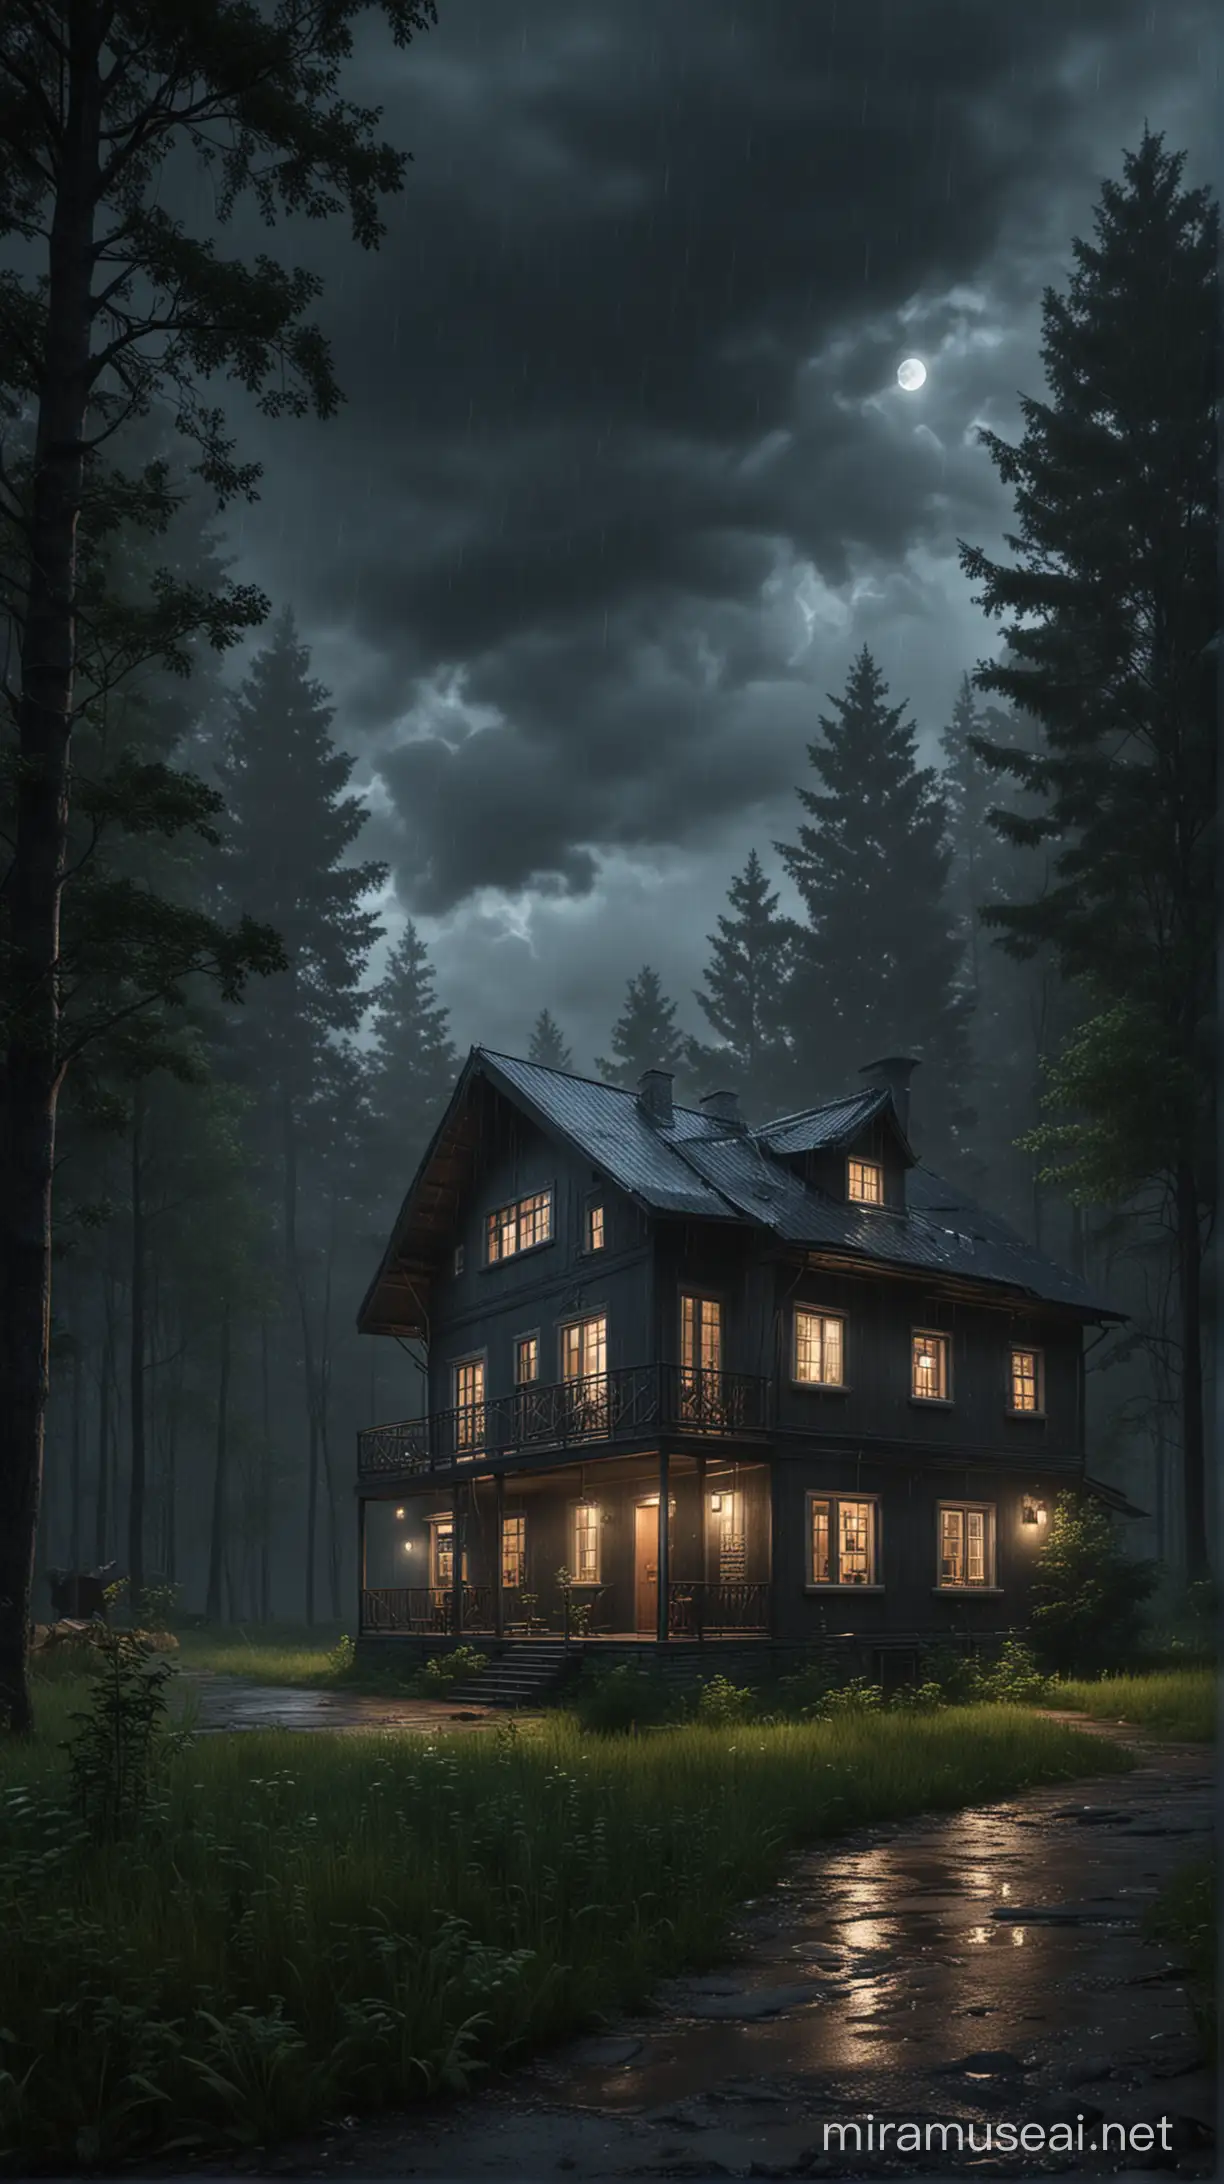 Rumah di hutan . Suasana hujan malam tampak mendung langit gelap. Realistic